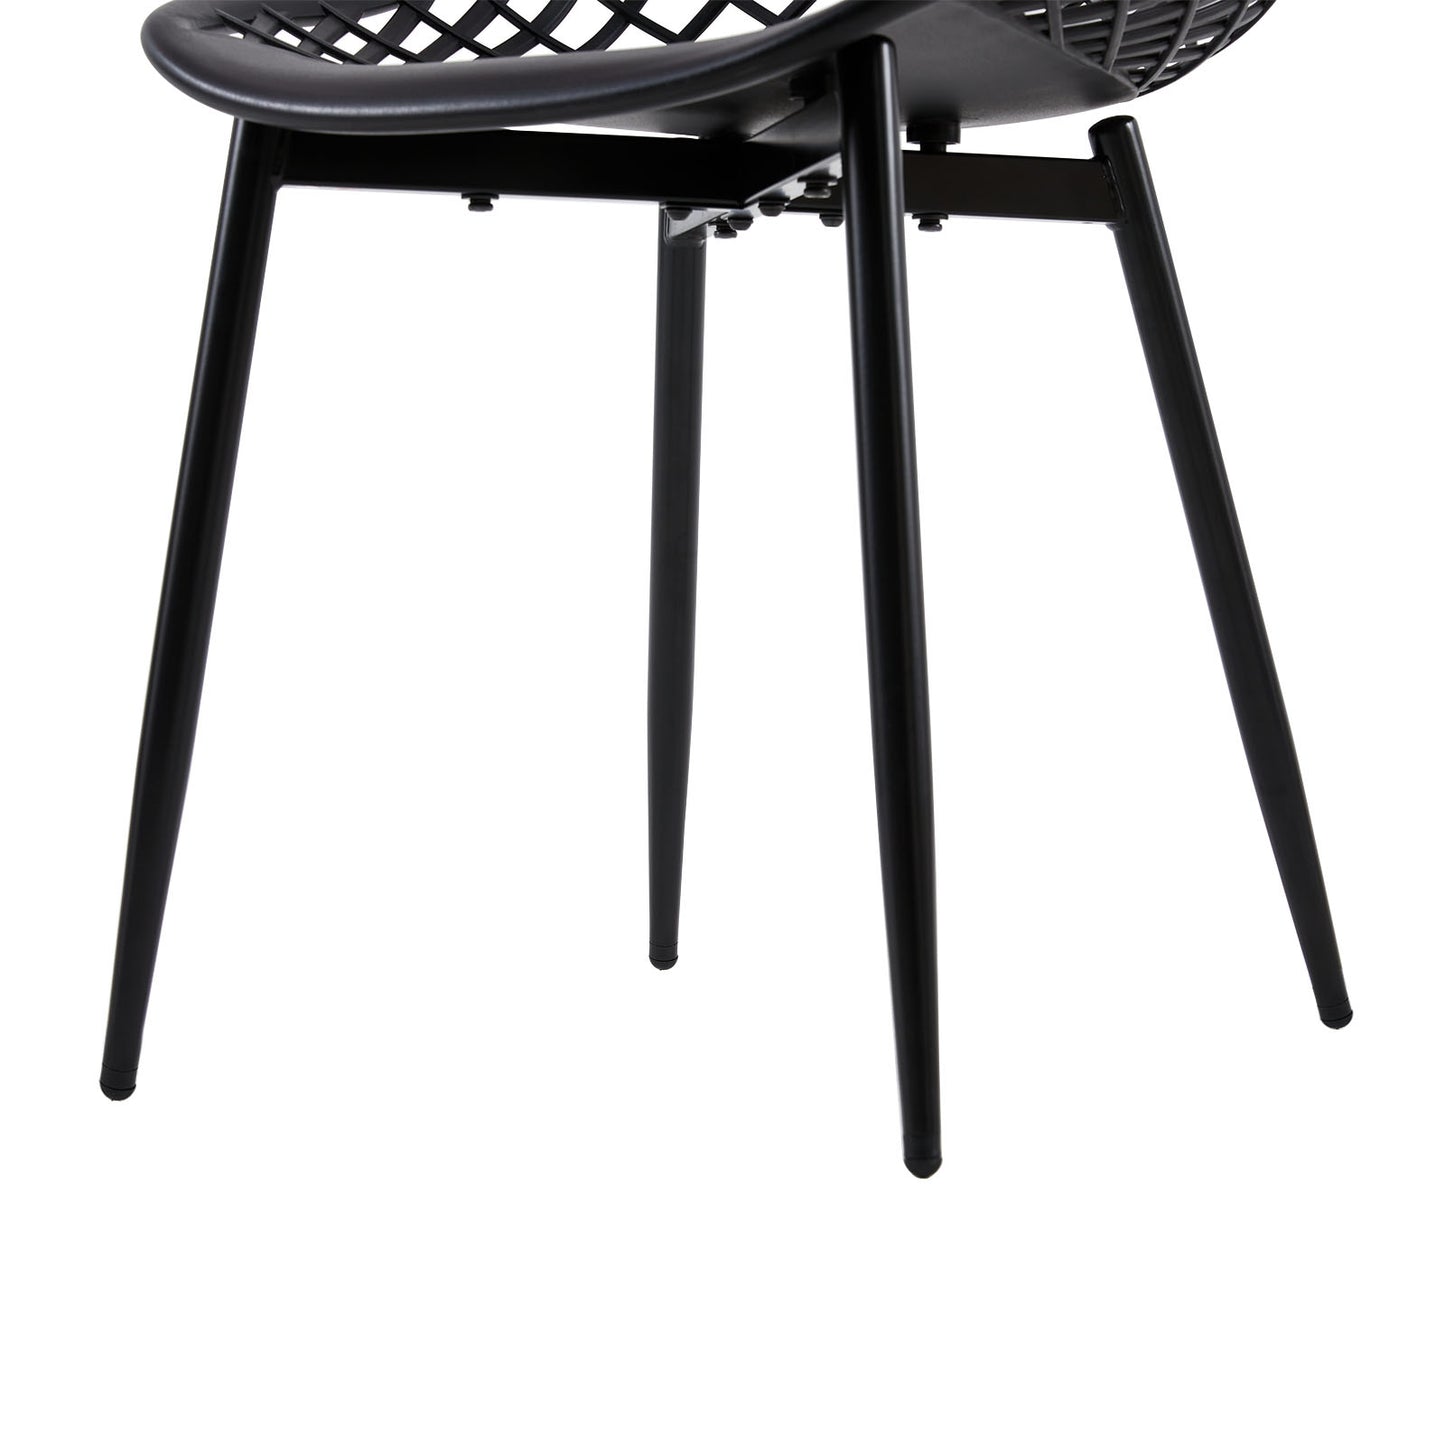 MILAN  Metal Side Chair (Set of 4) - Black/Gray/White